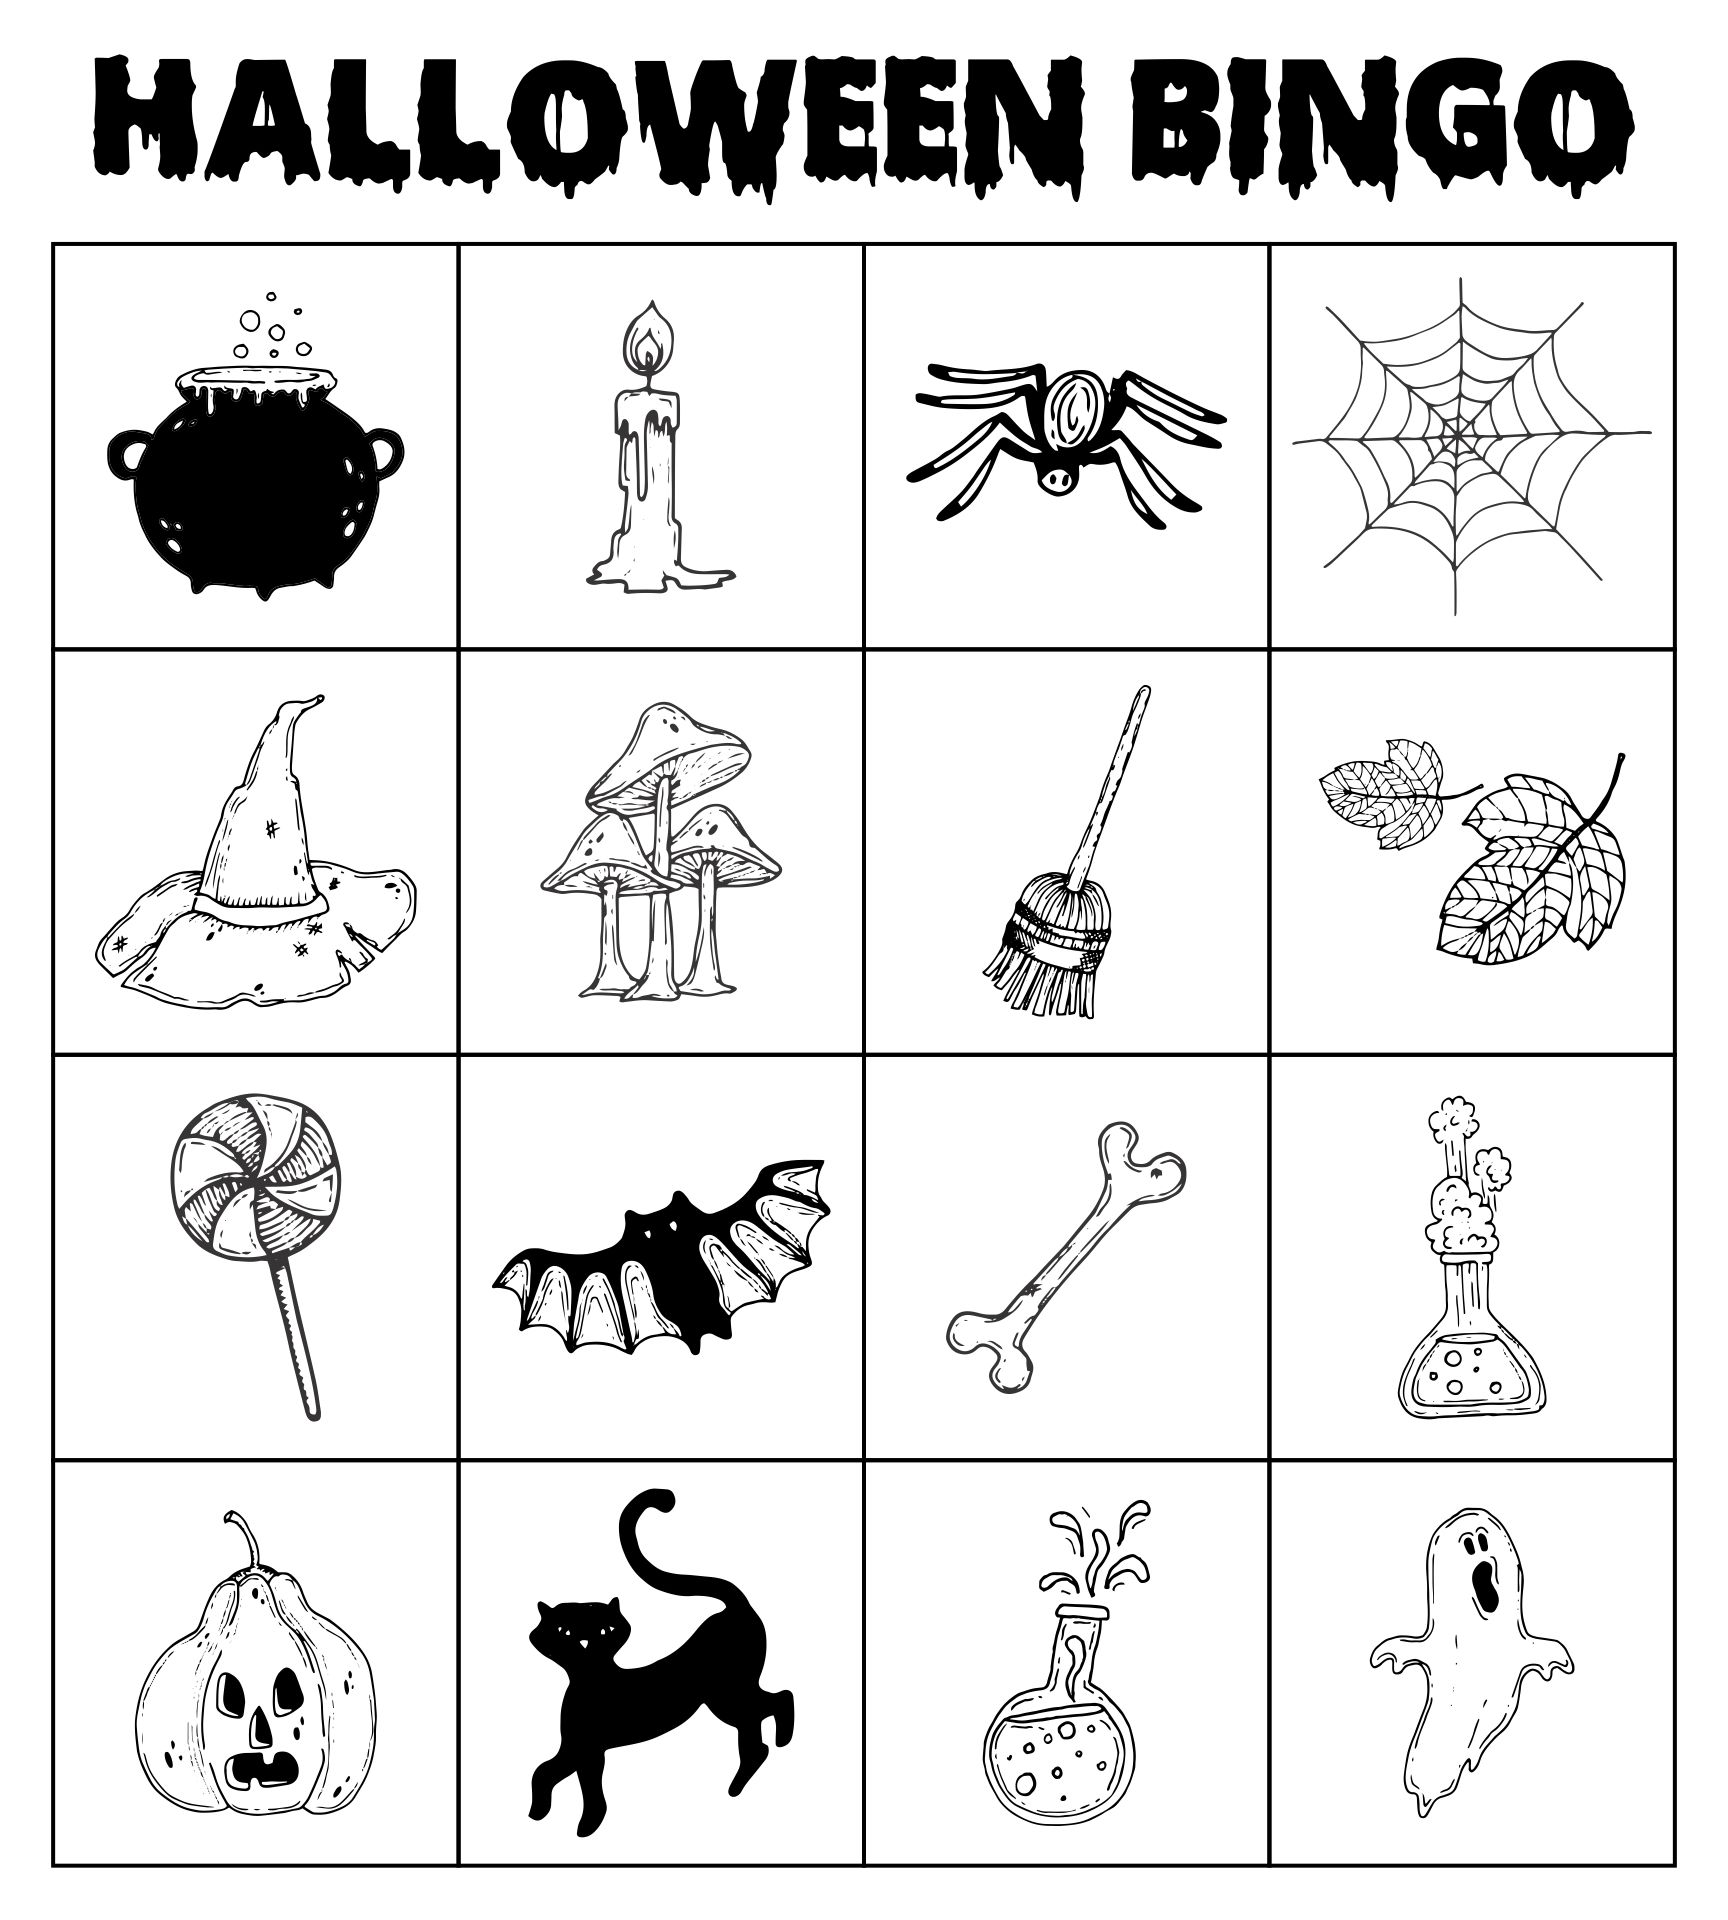 Happy Halloween Bingo Game In Black And White